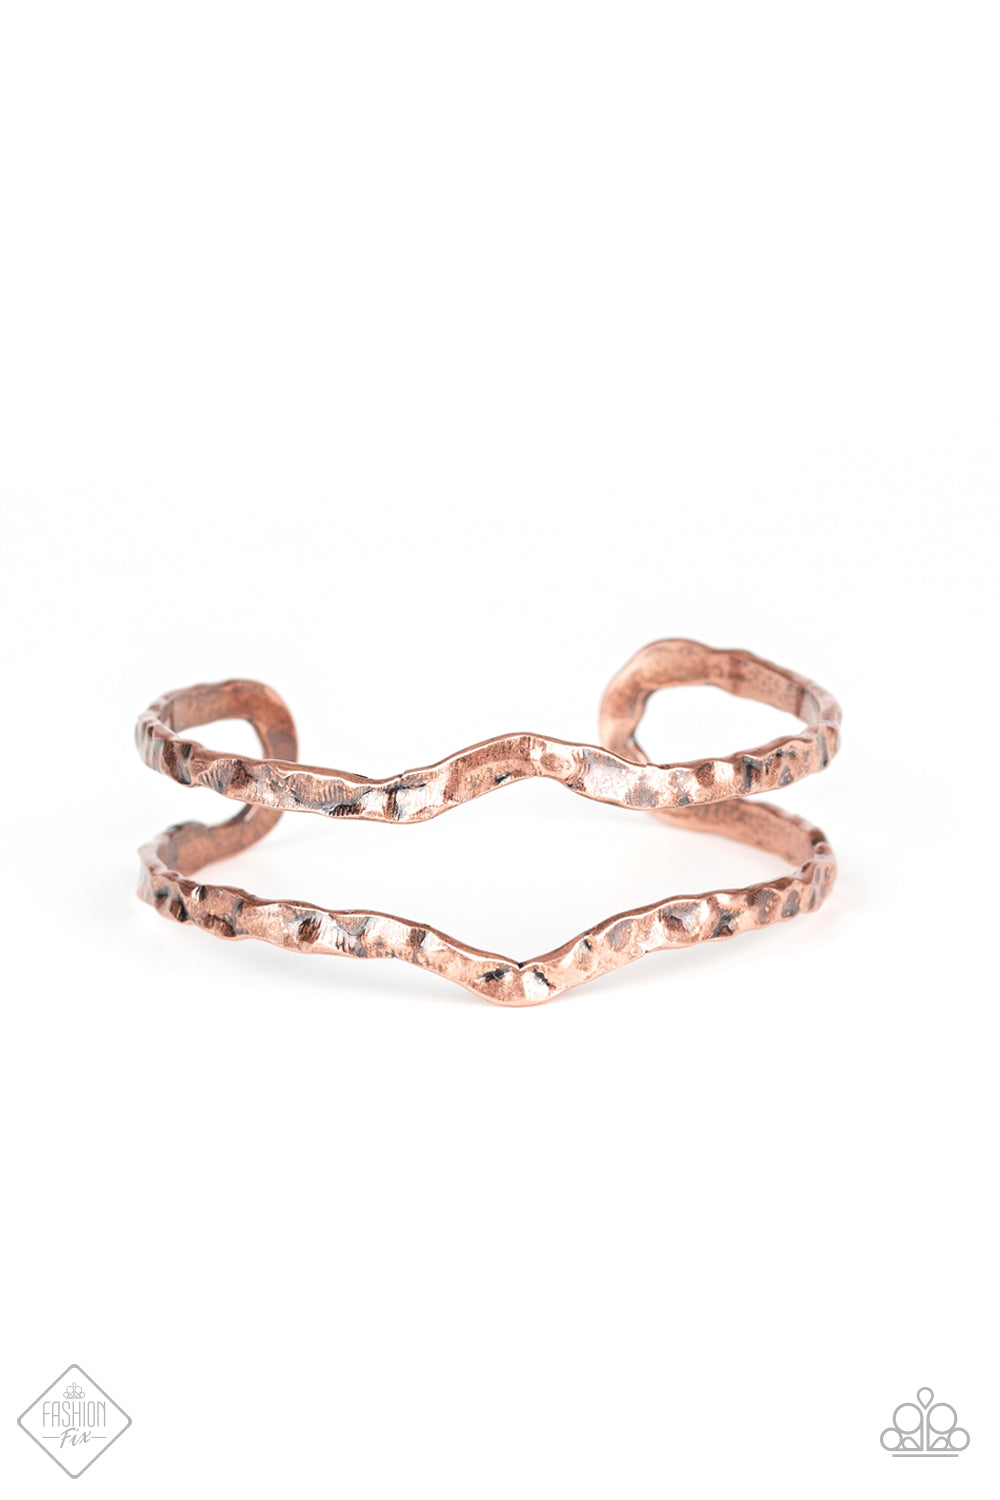 Rustic Ruler Copper Paparazzi Bracelet Cashmere Pink Jewels - Cashmere Pink Jewels & Accessories, Cashmere Pink Jewels & Accessories - Paparazzi